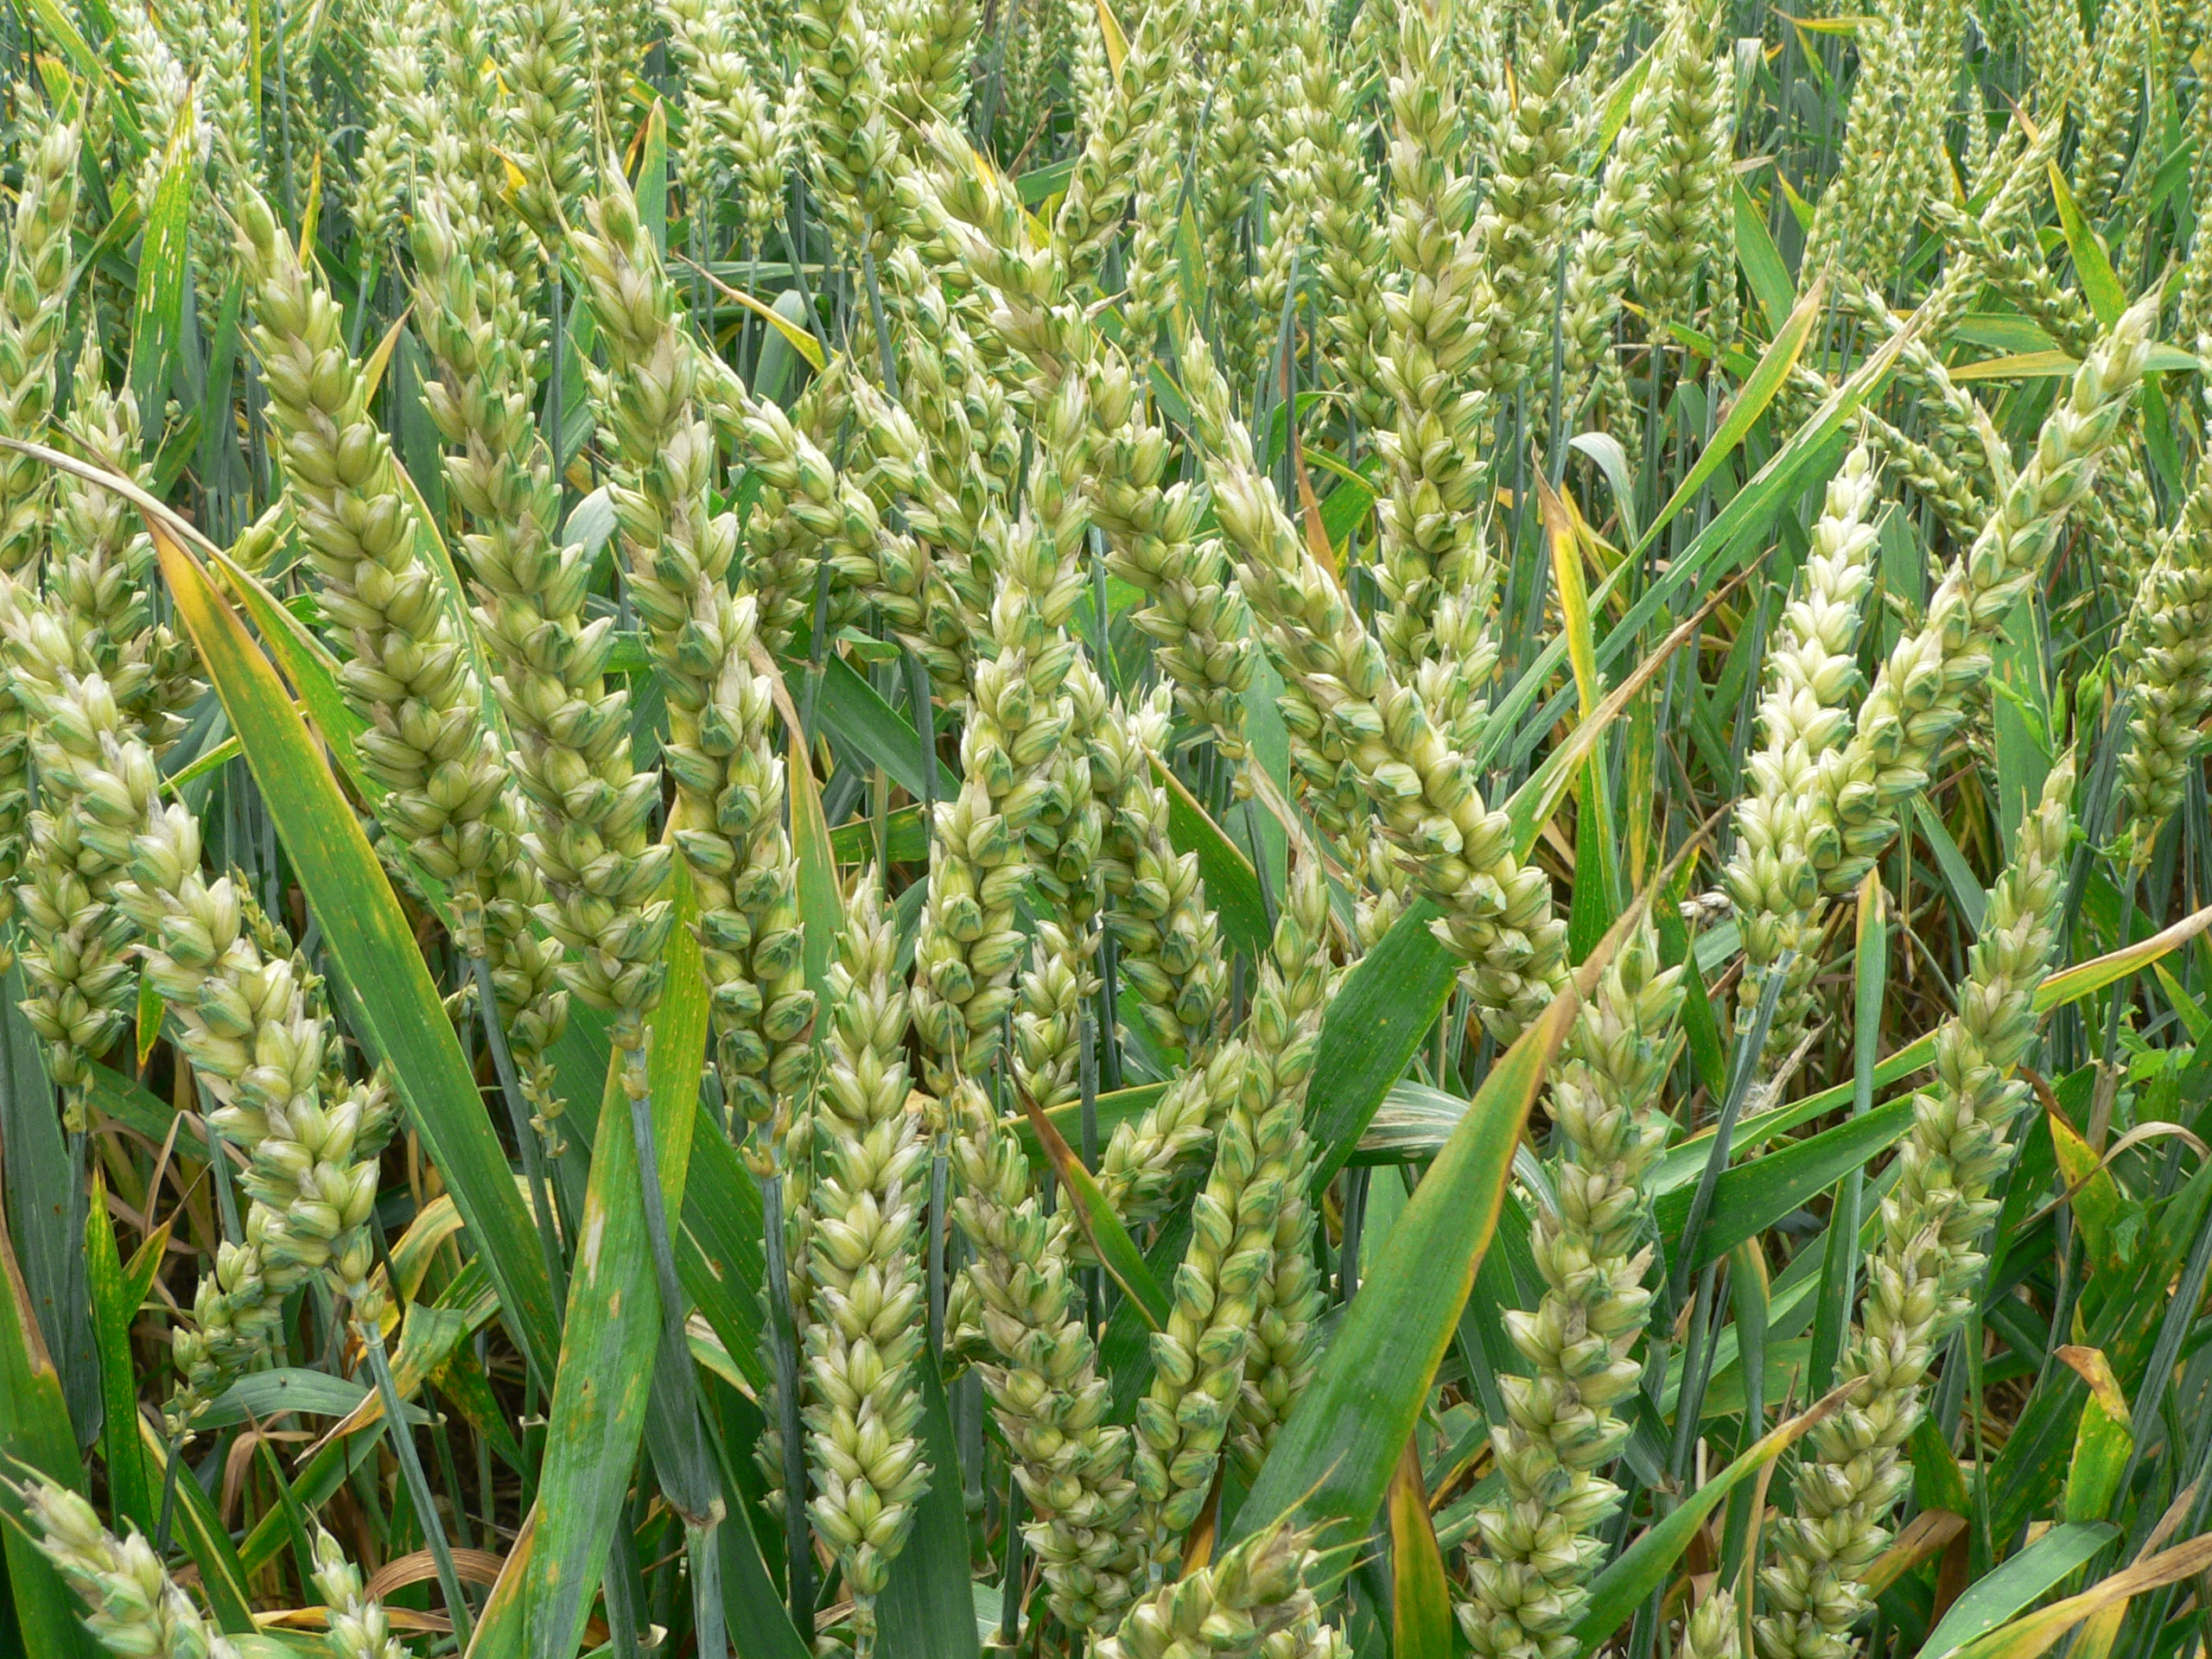 Wheat Plants